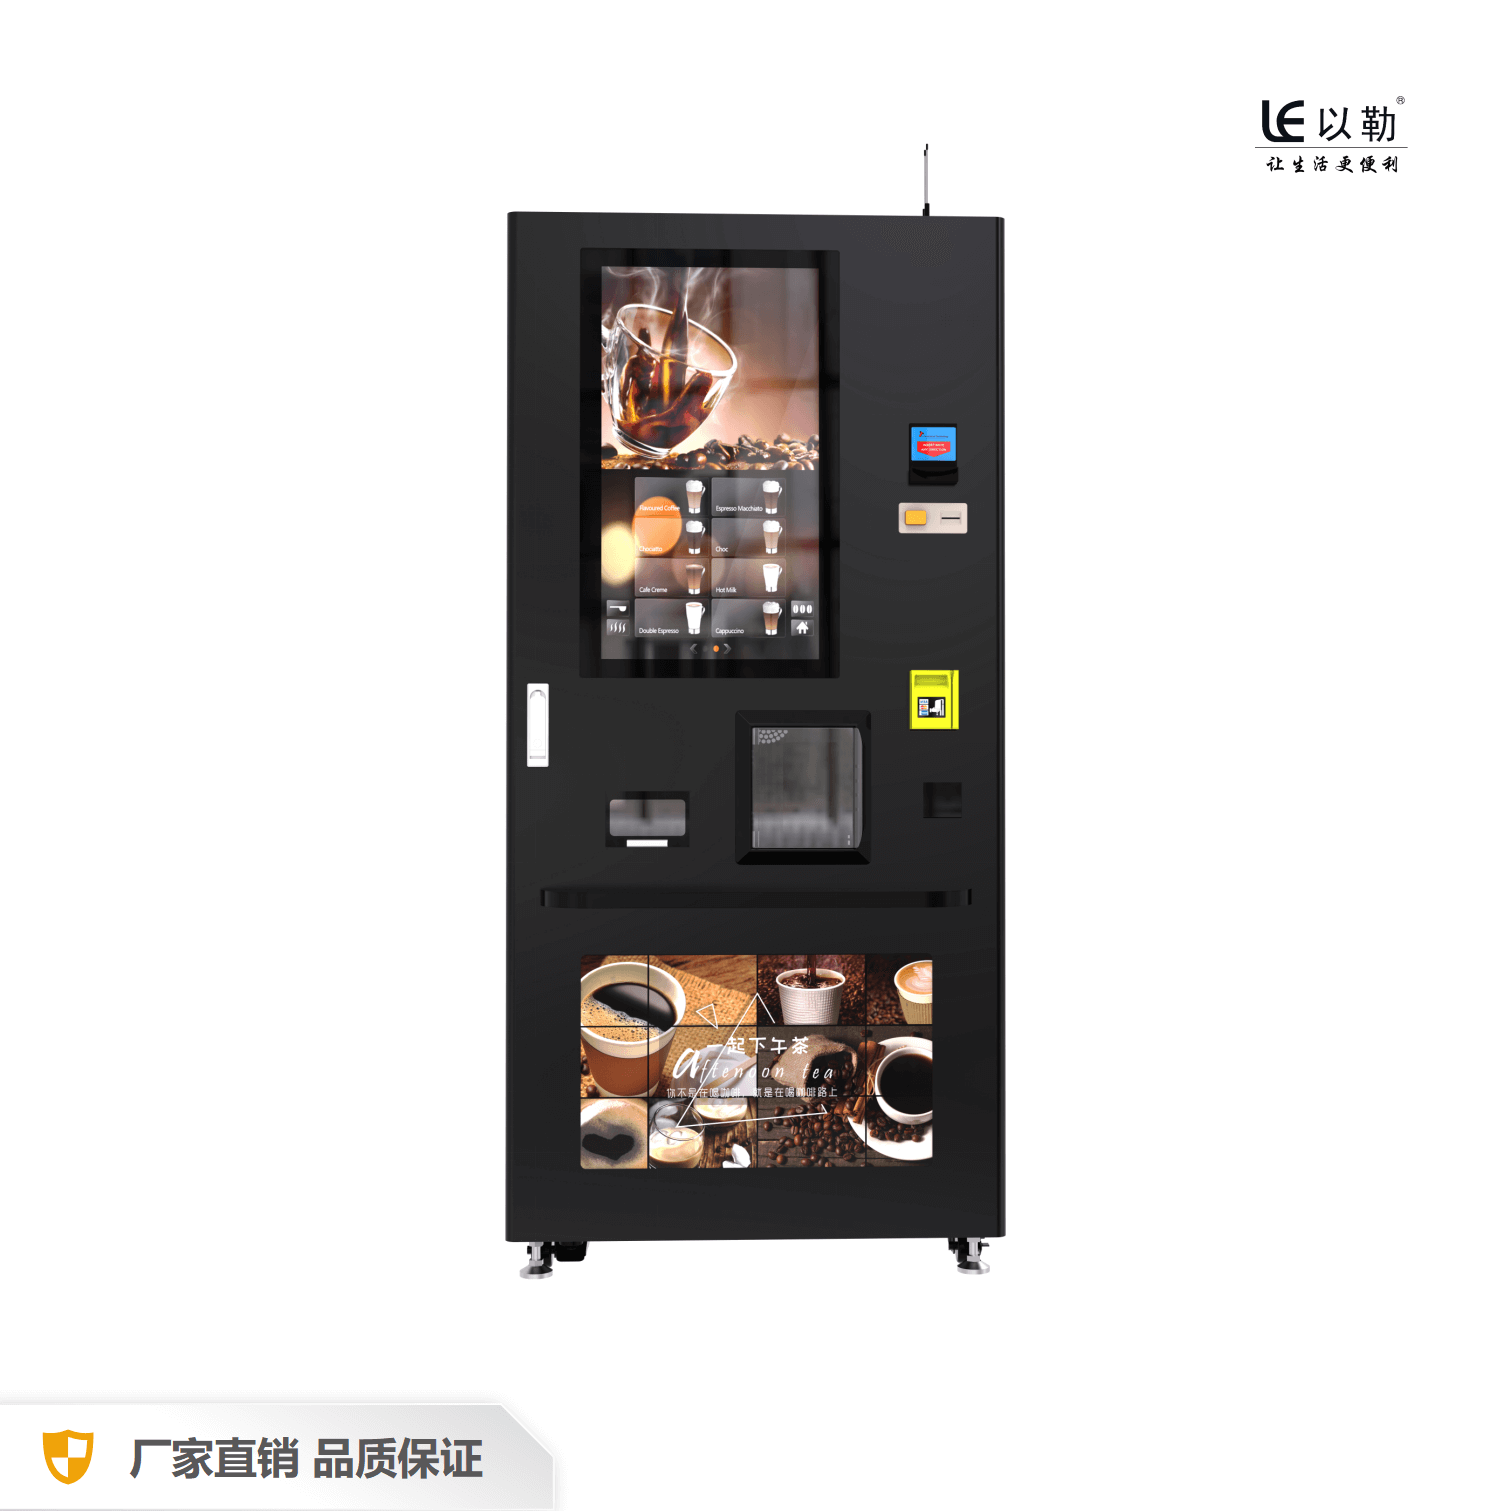 Freshly Ground Bus Station Office Coffee Vending Machine